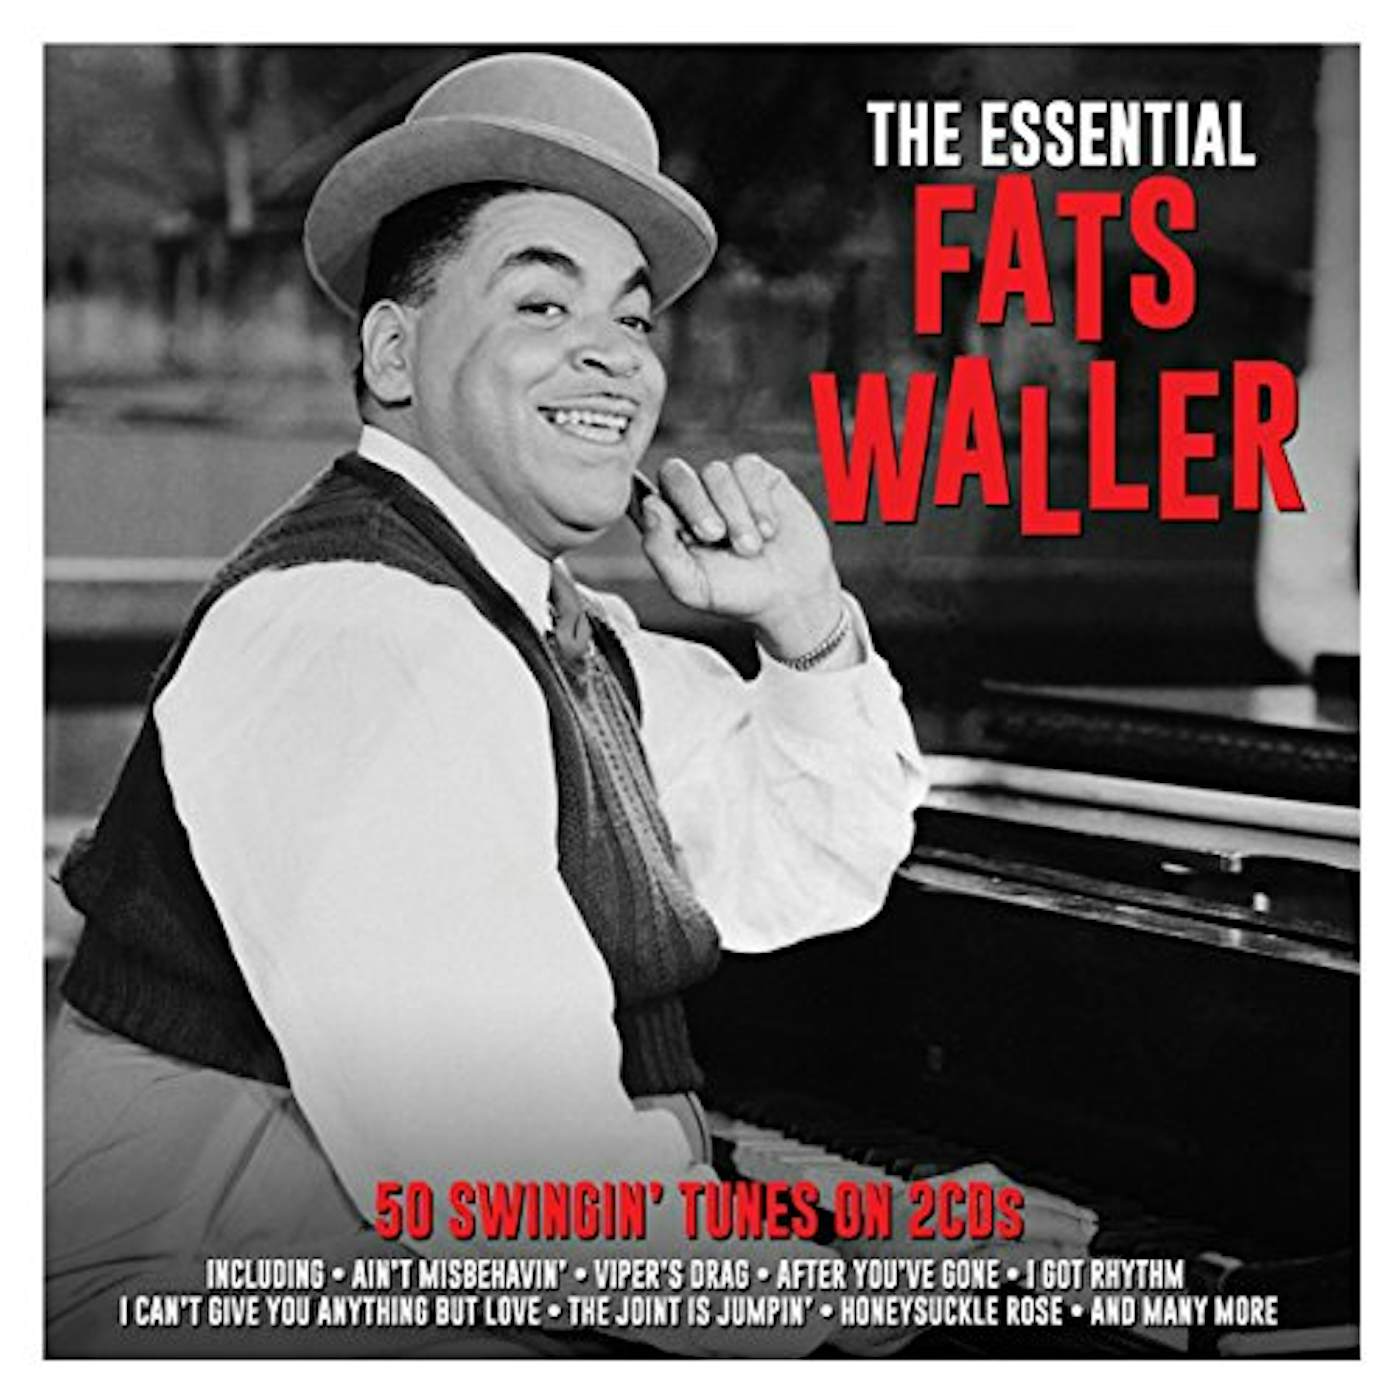 Fats Waller ESSENTIAL CD